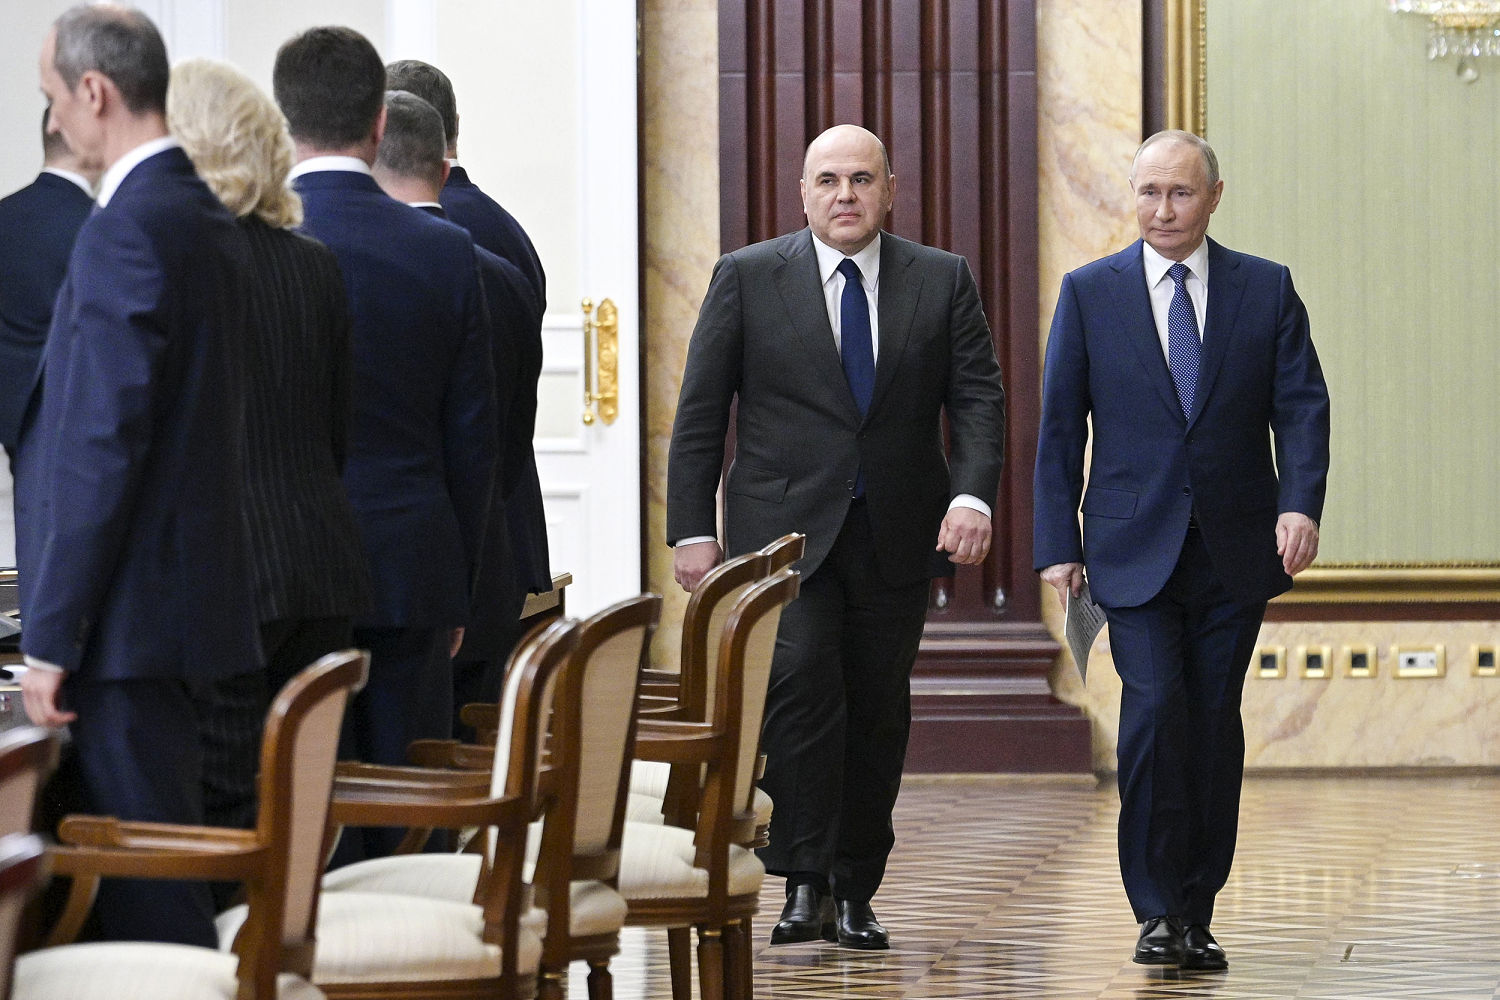 Putin, seeking continuity, reappoints technocrat Prime Minister Mishustin